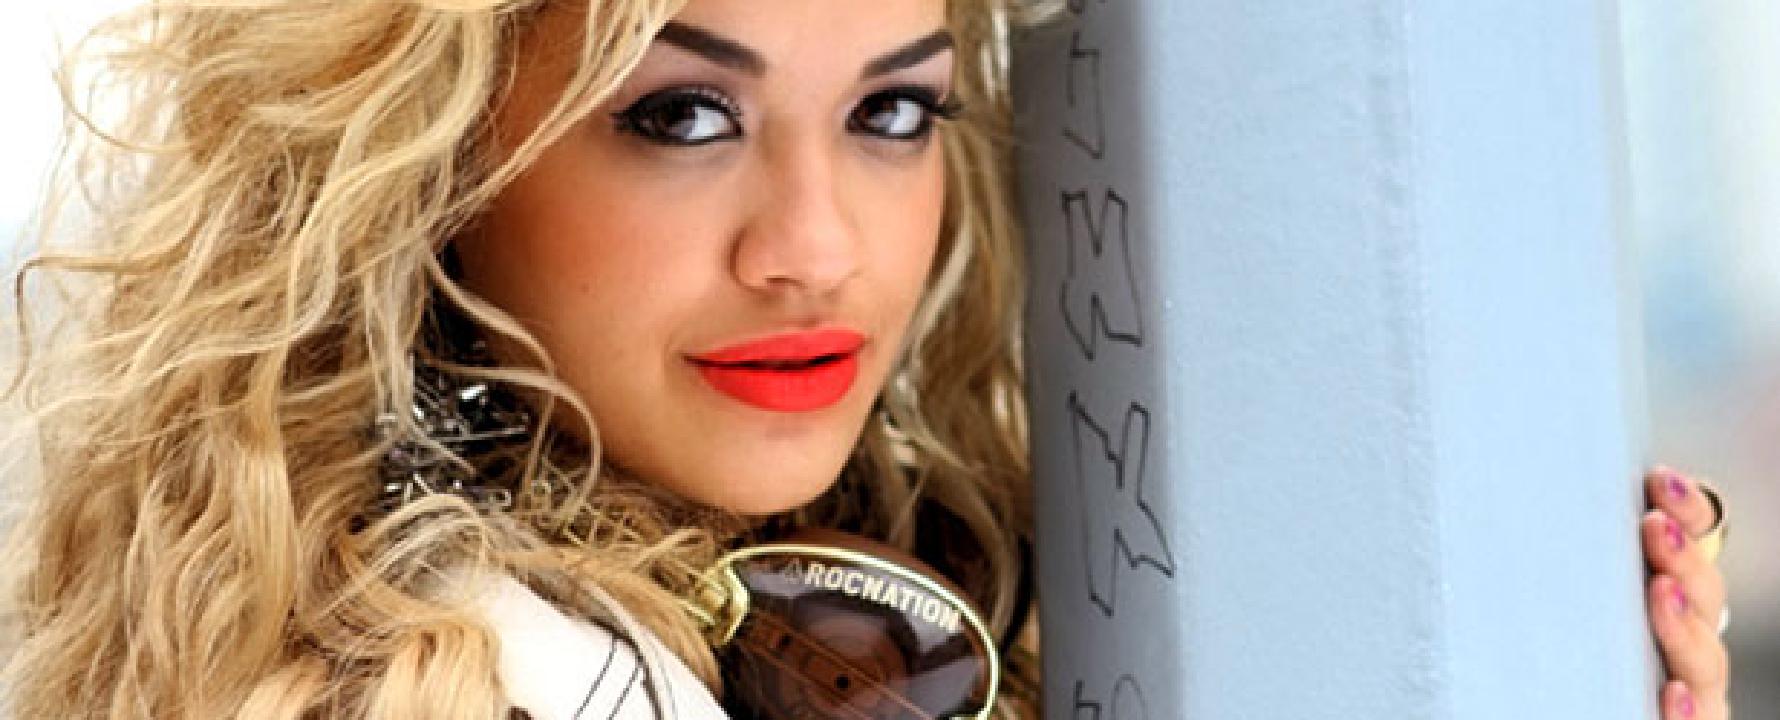 Fotografia promocional de Rita Ora.